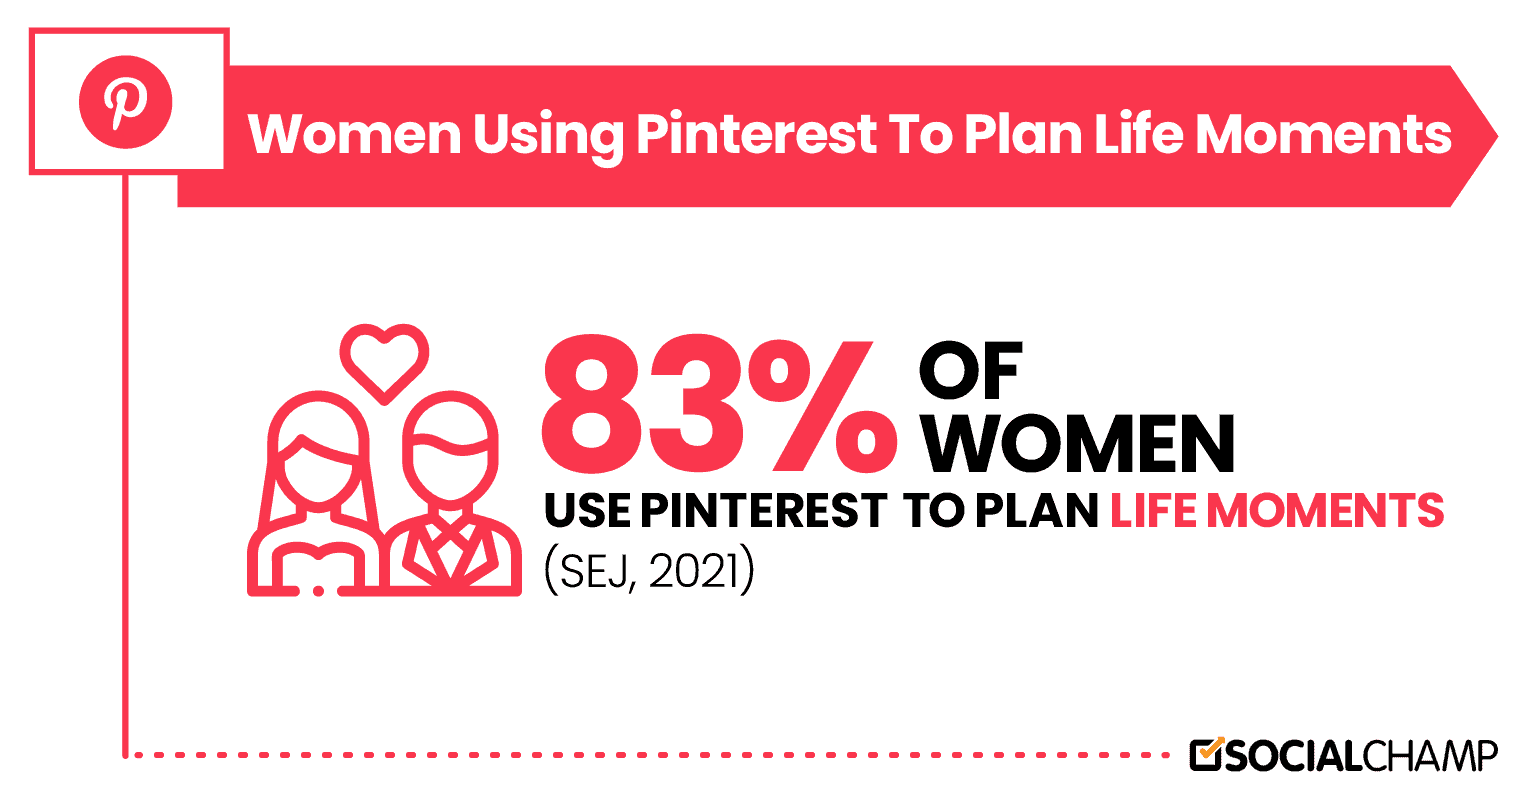 Women Use Pinterest